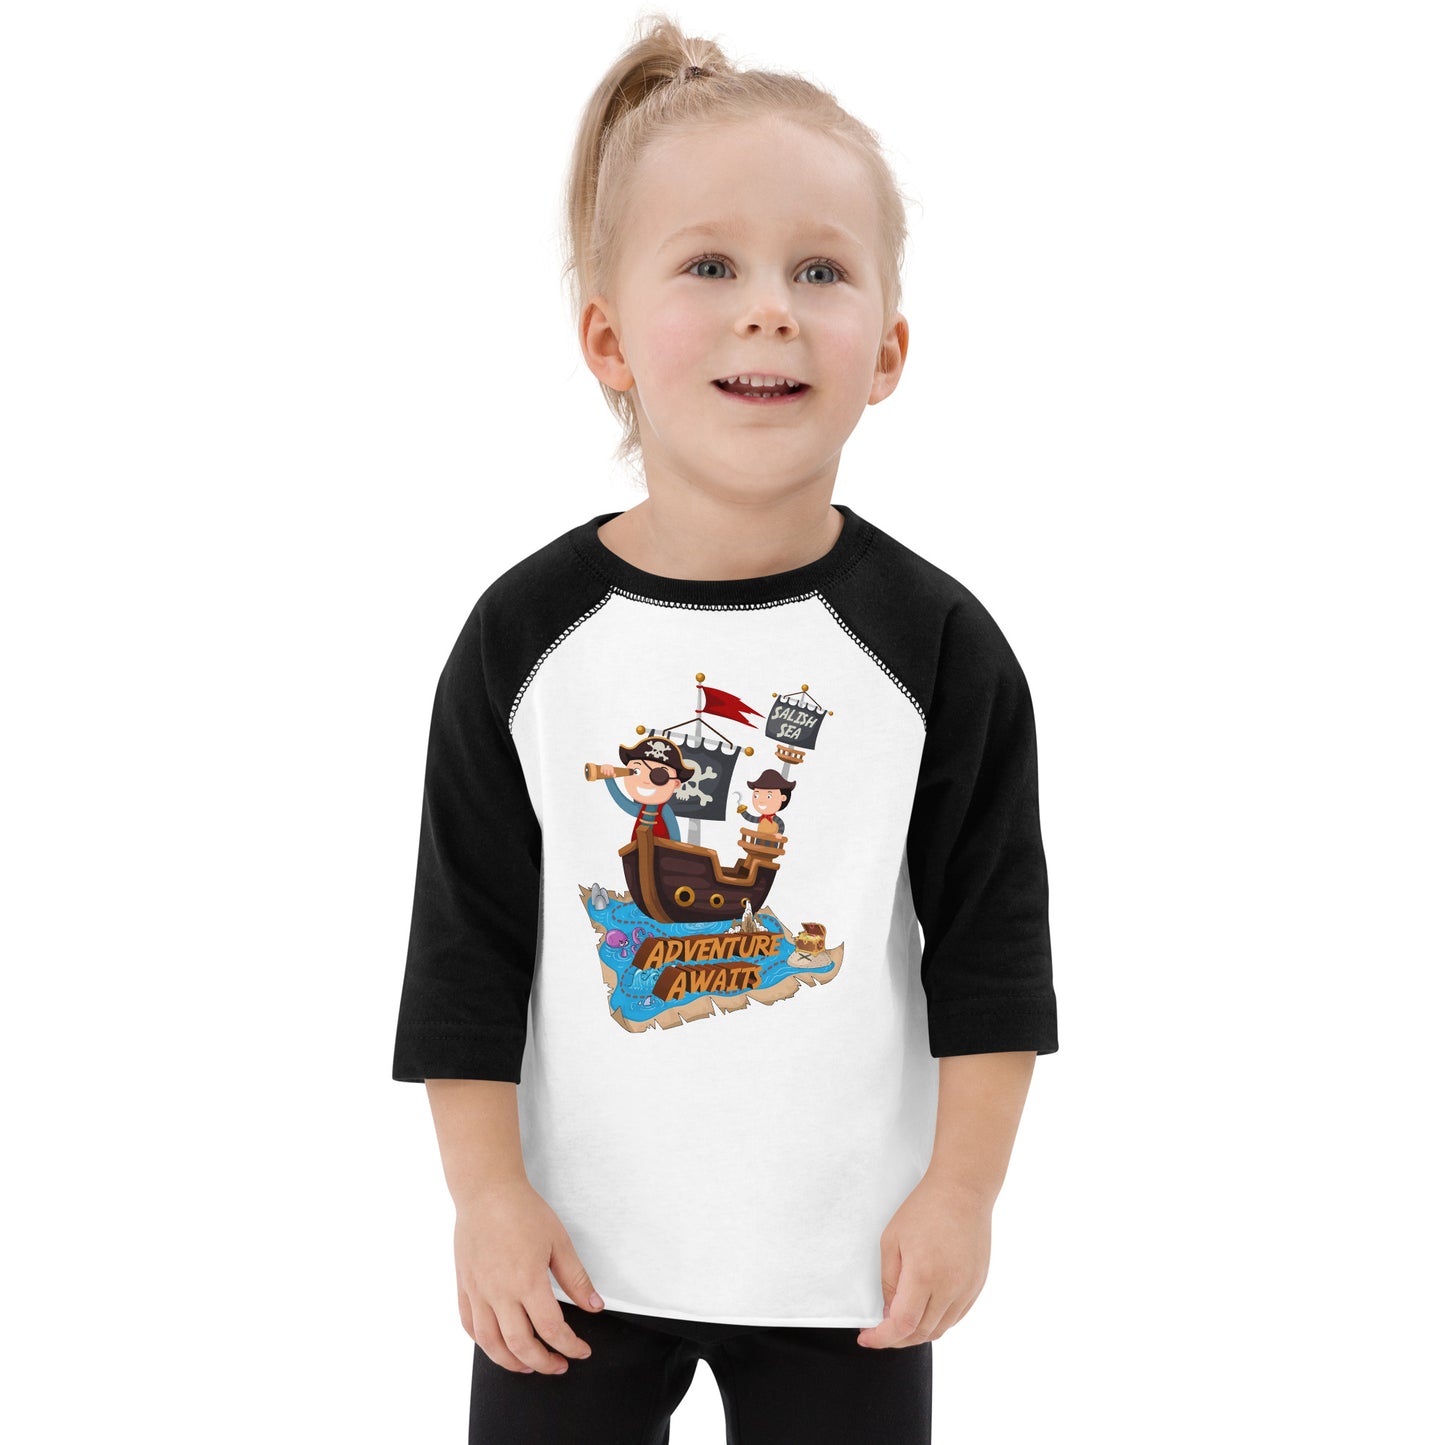 Toddler - "Adventure Awaits" - Baseball Shirt